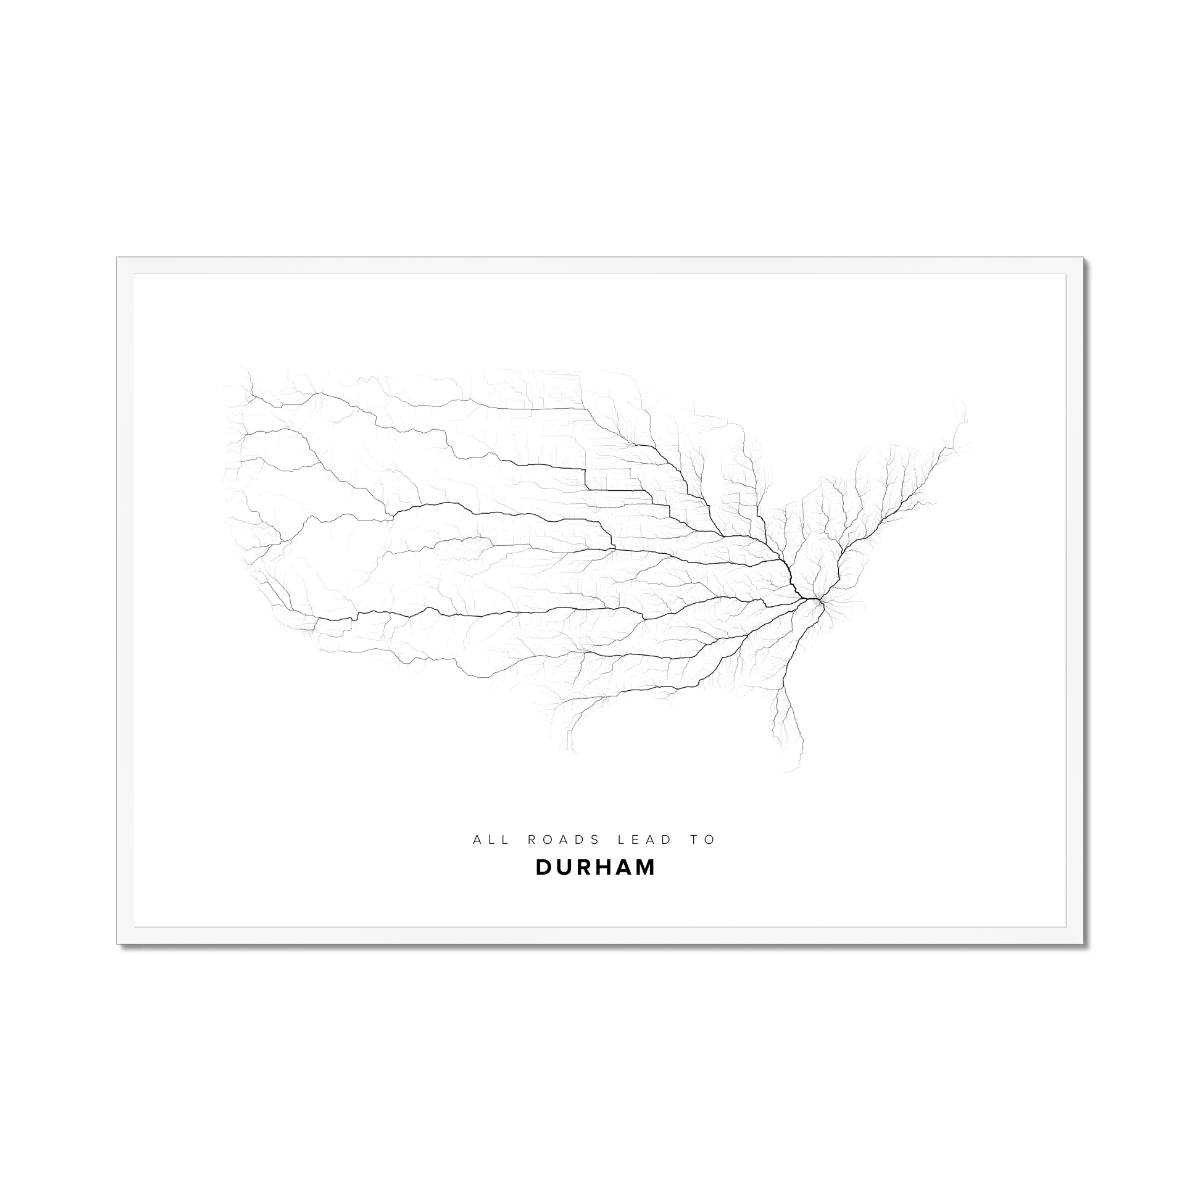 All roads lead to Durham (United States of America) Fine Art Map Print